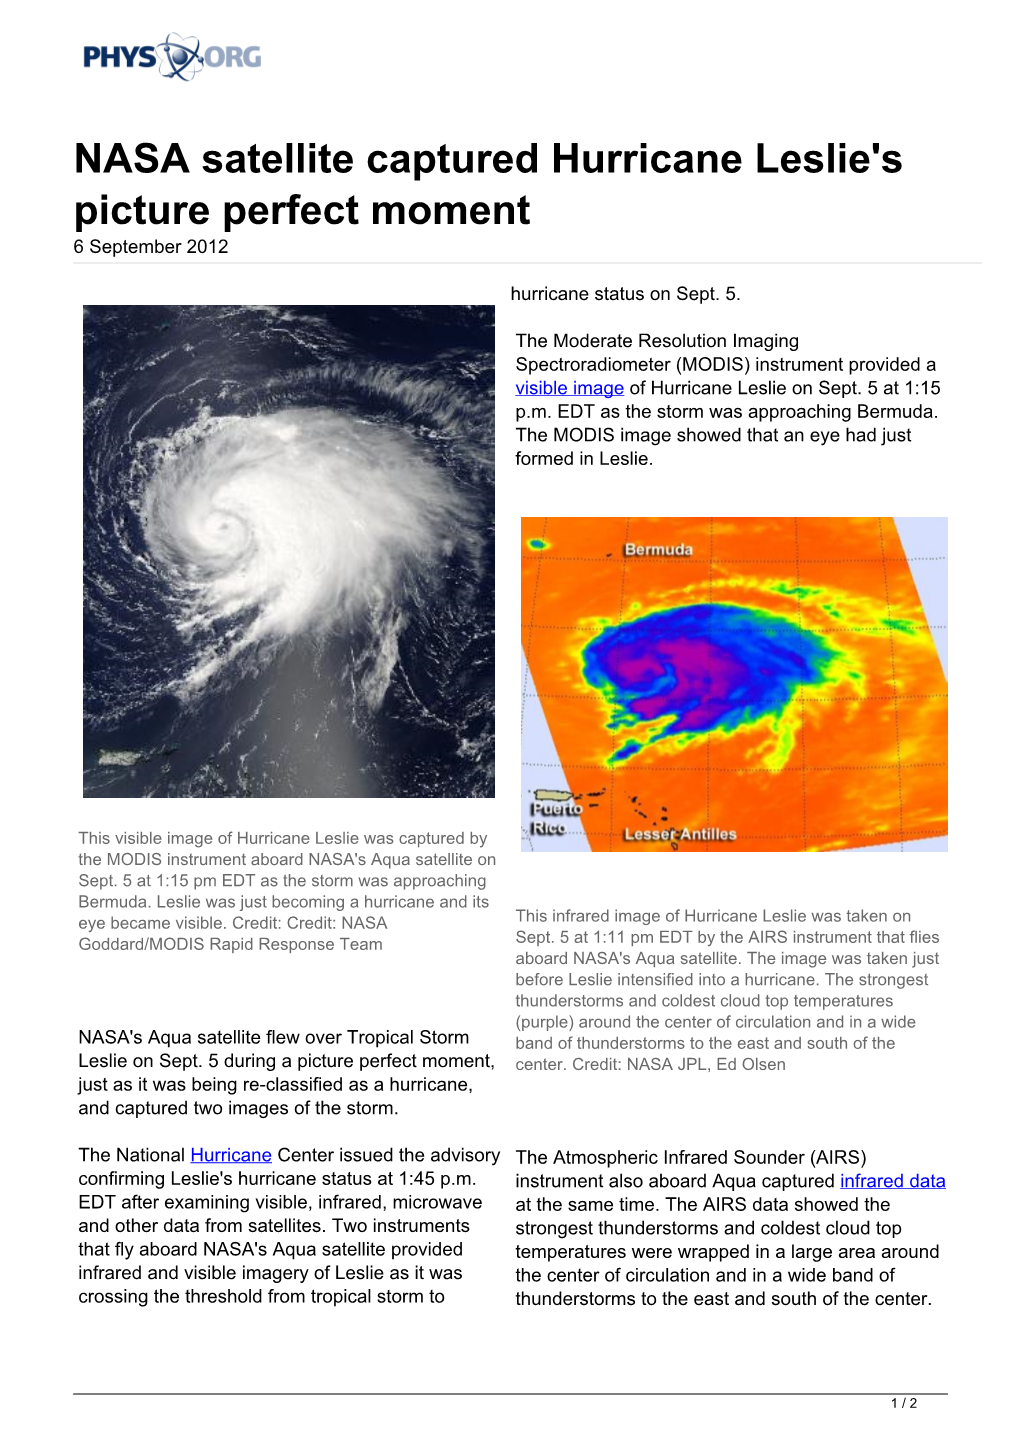 NASA Satellite Captured Hurricane Leslie's Picture Perfect Moment 6 September 2012